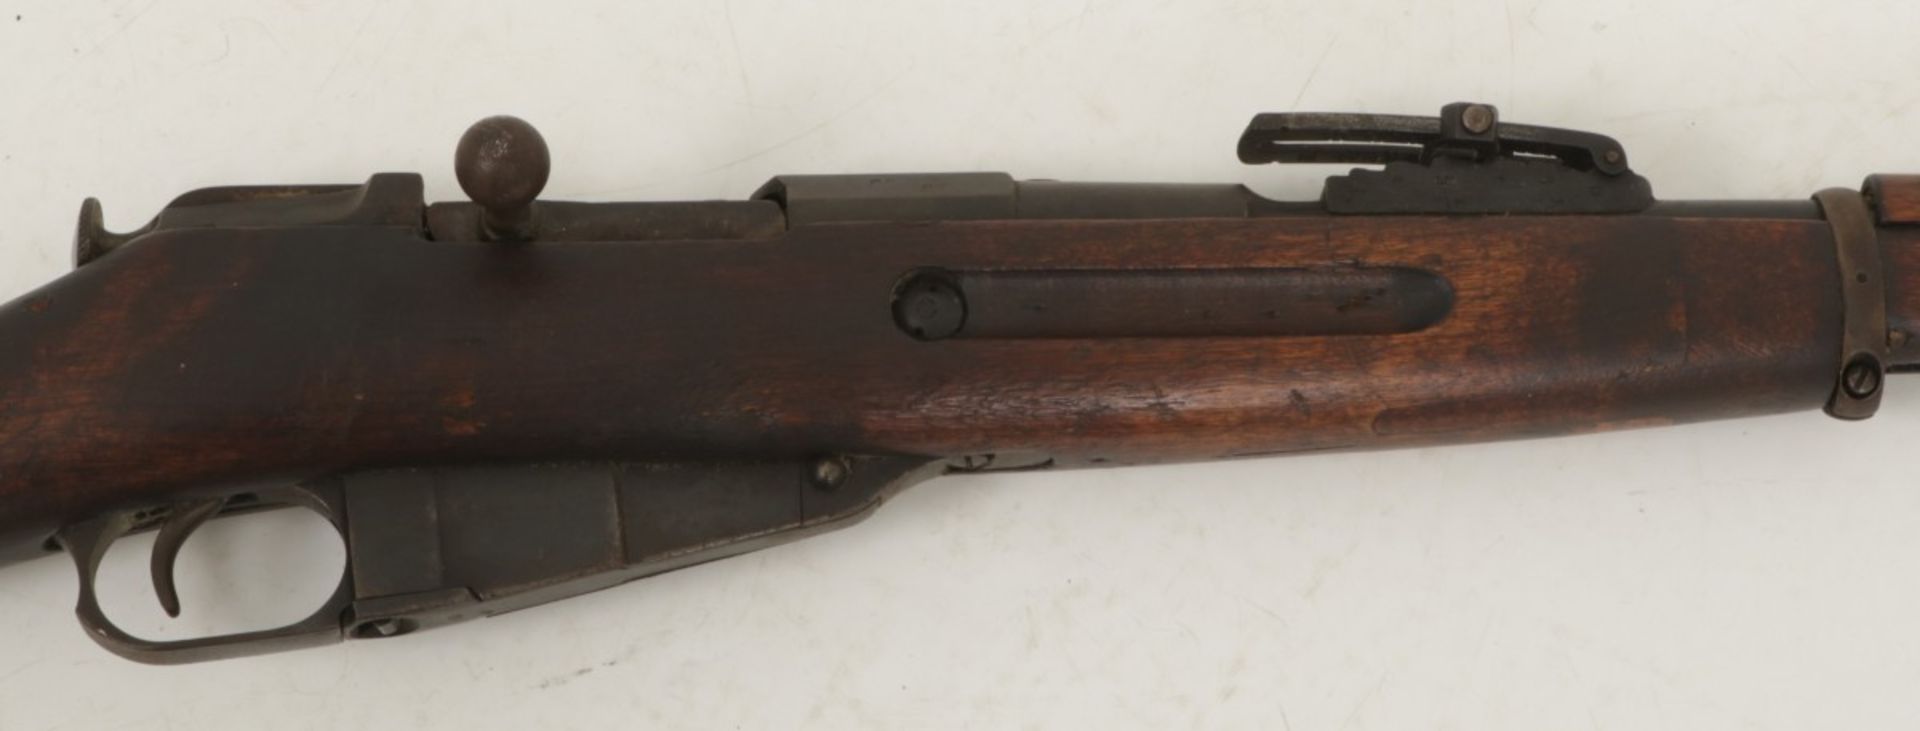 A Mosin Nagant bolt action rifle, Rusland, mid. 20e eeuw. - Image 2 of 4